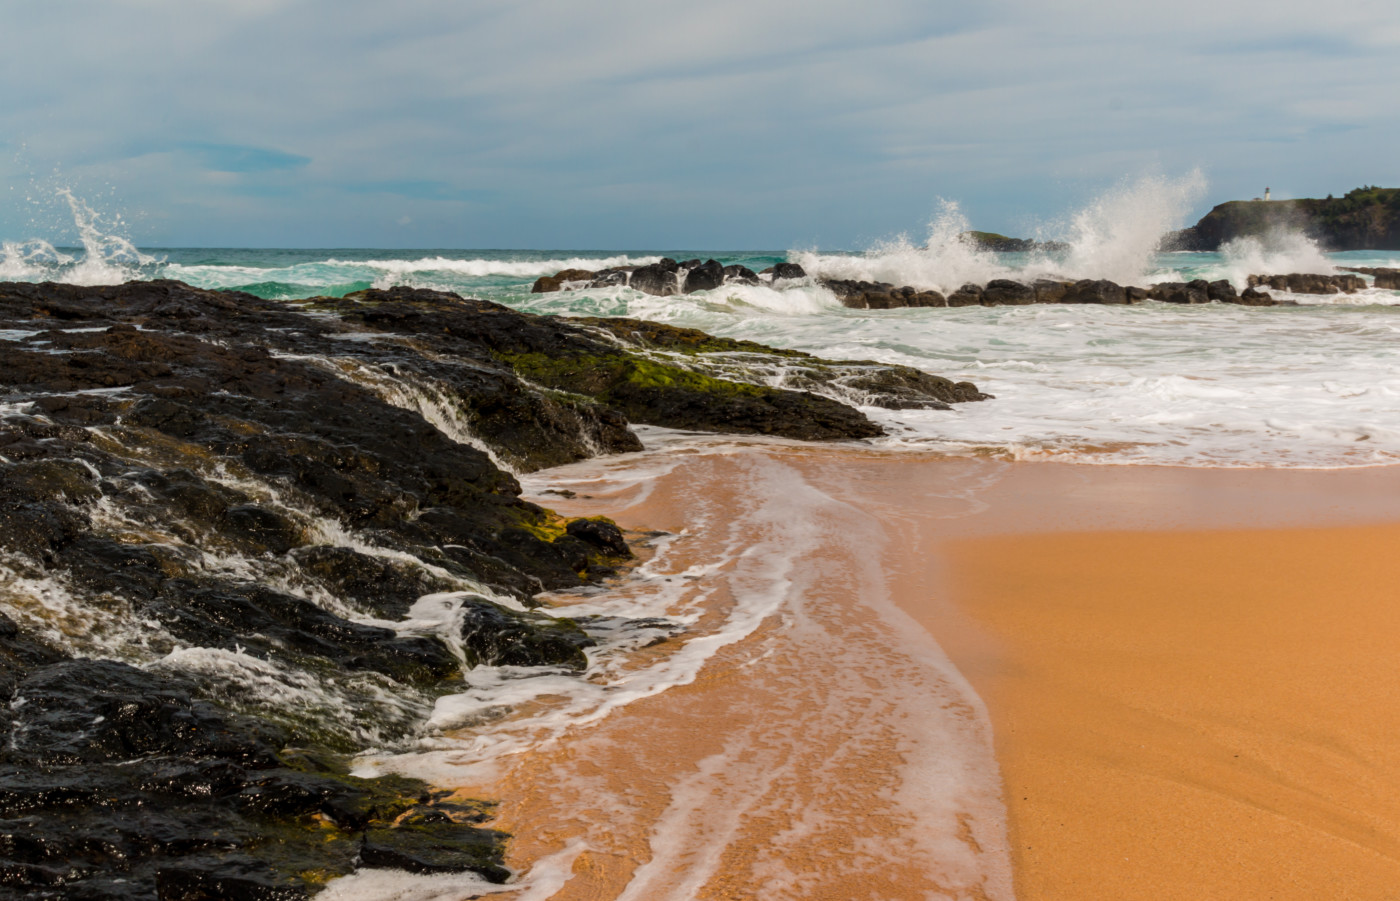 Waves Crash Over Exposed Coral Reef With Kilauea Lighthouse in The Distance, Kauapea Beach (Secret Beach), Kauai, Hawaii, USA